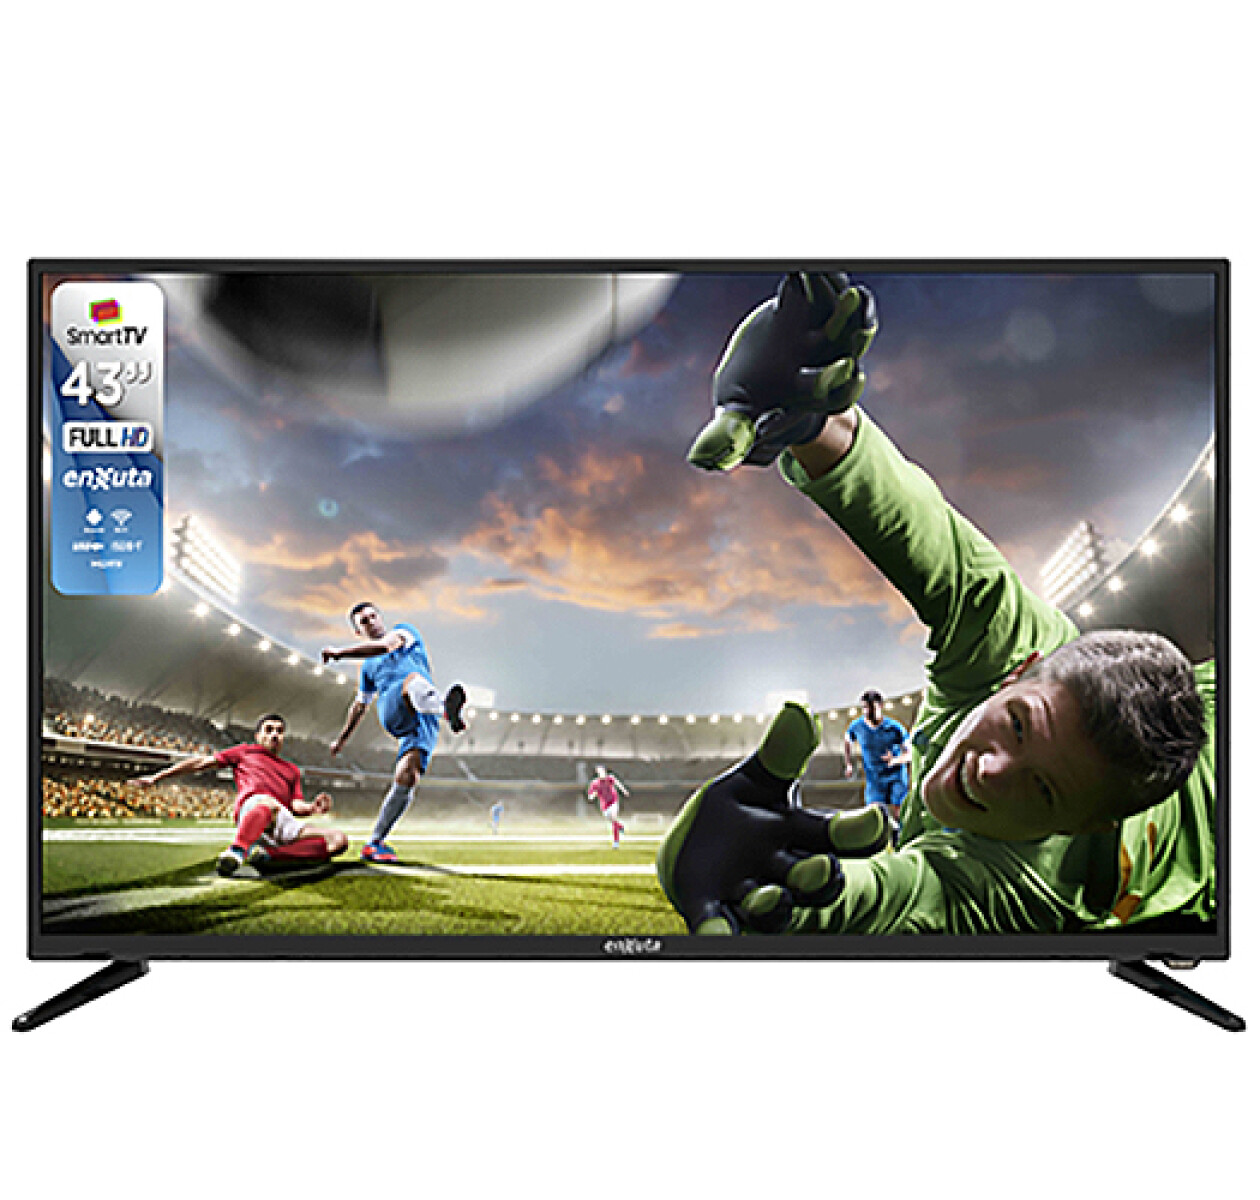 TV ENXUTA 43” LEDENX1243SDF2KA FHD SMART Android - Sin color 